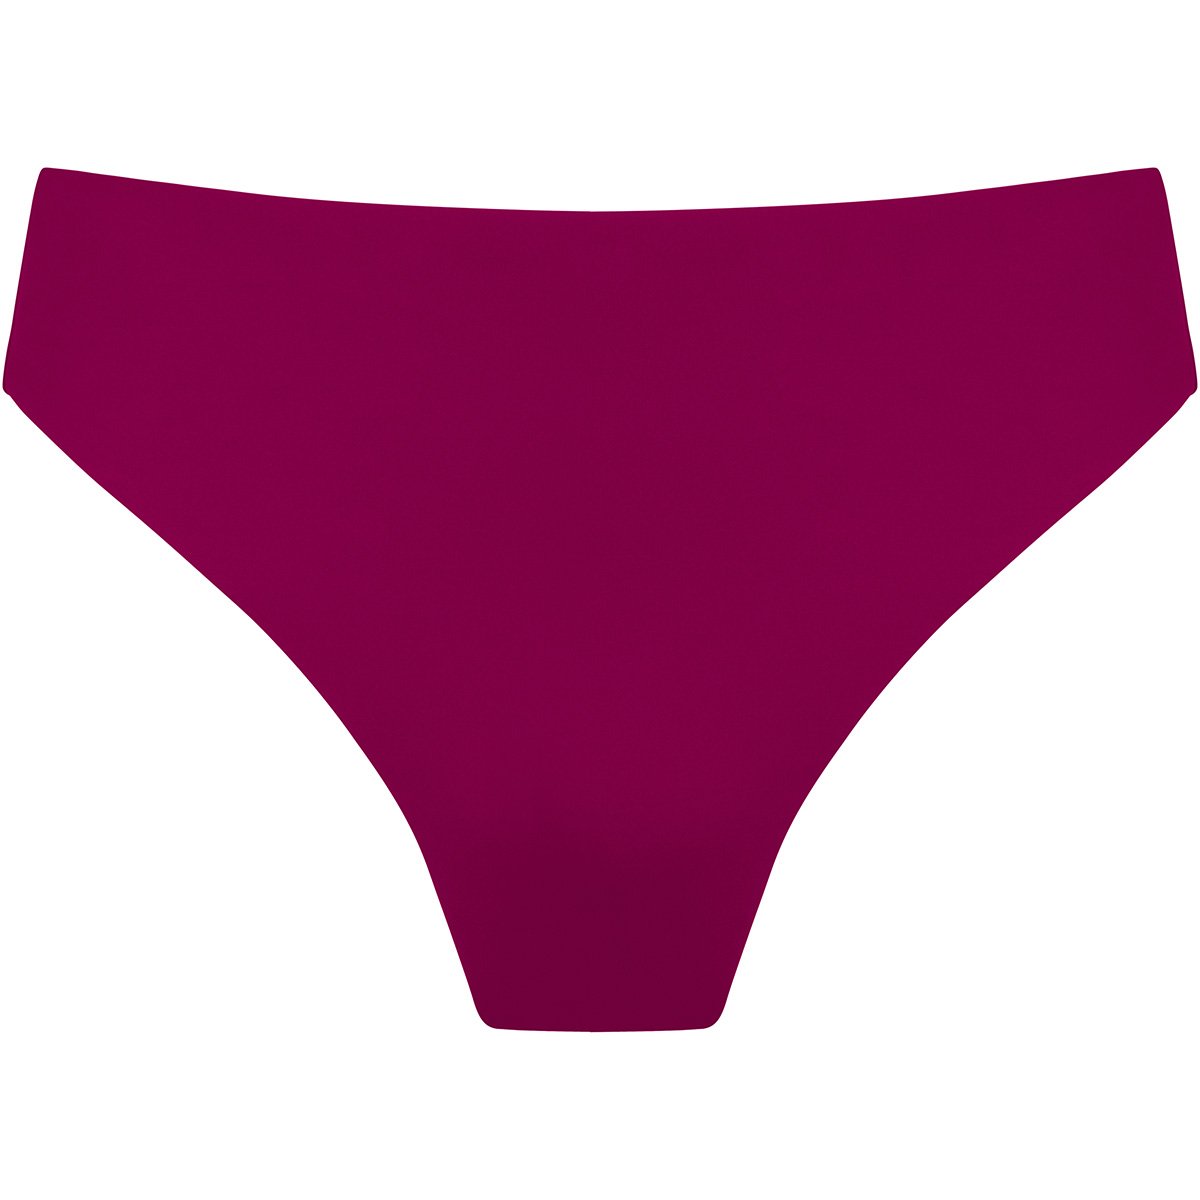 Rouge: The Modern High-Waisted Bikini Bottom